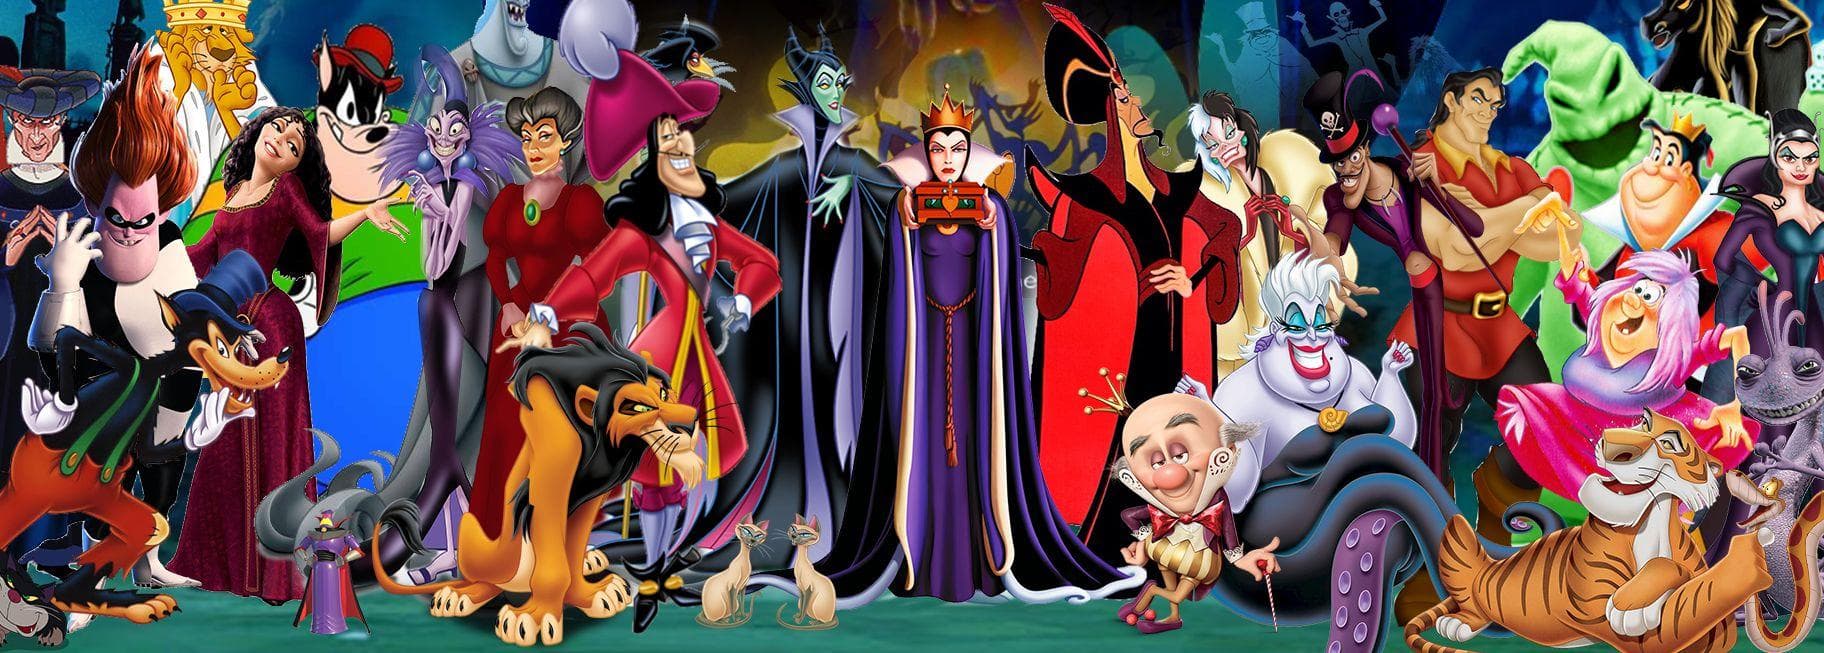 Every State's Most Popular Disney Villain - Viasat blog